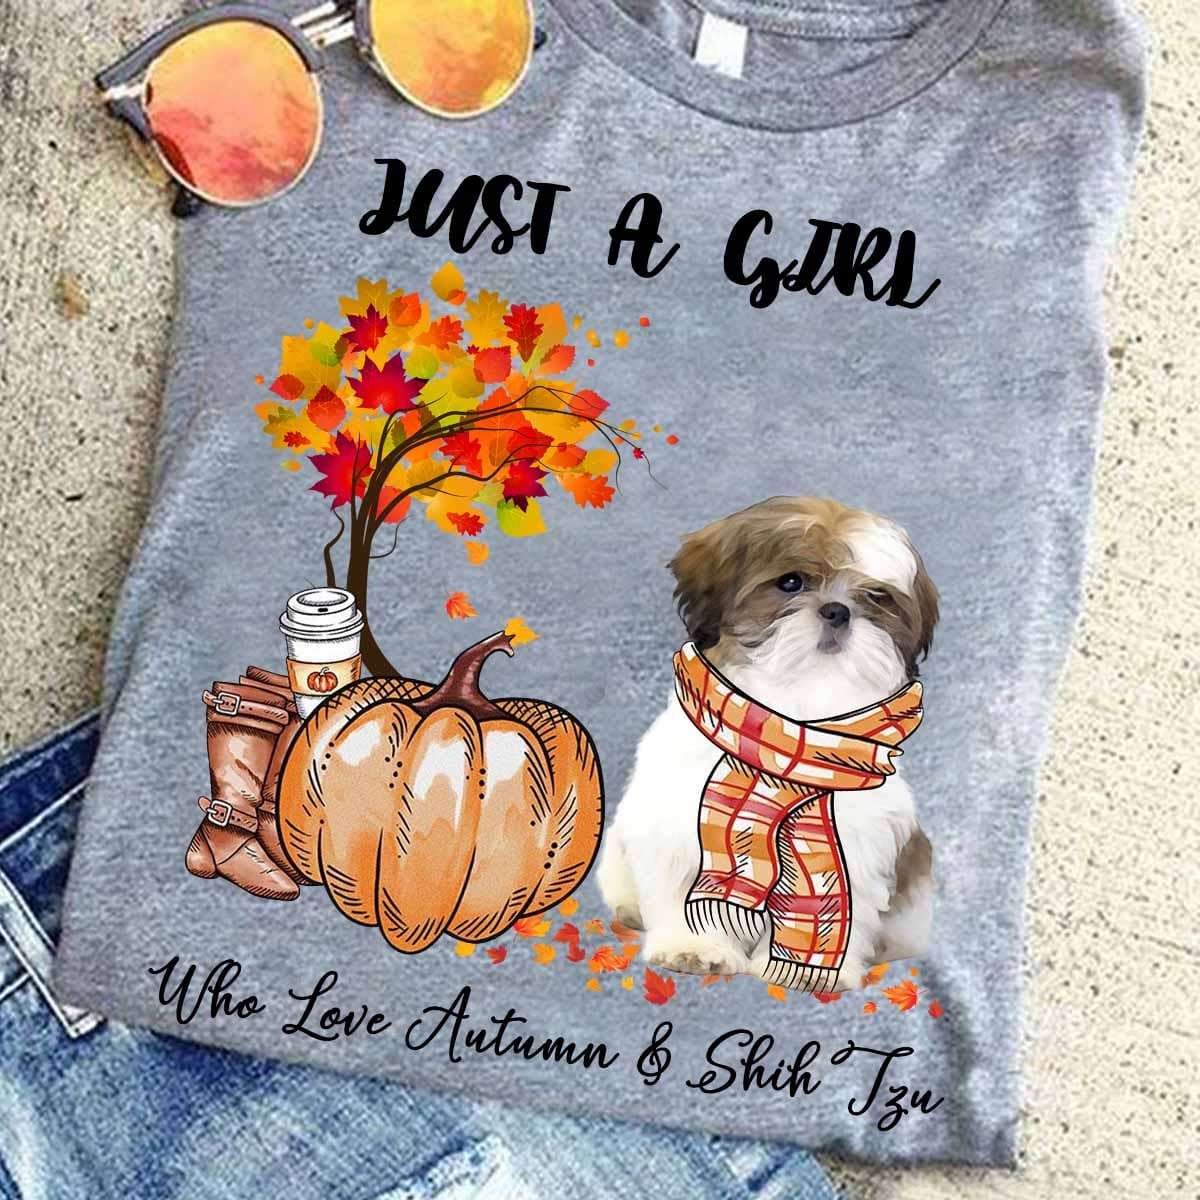 Just a girl who love autumn and Shih Tzu - Autumn the season, Shih Tzu dog